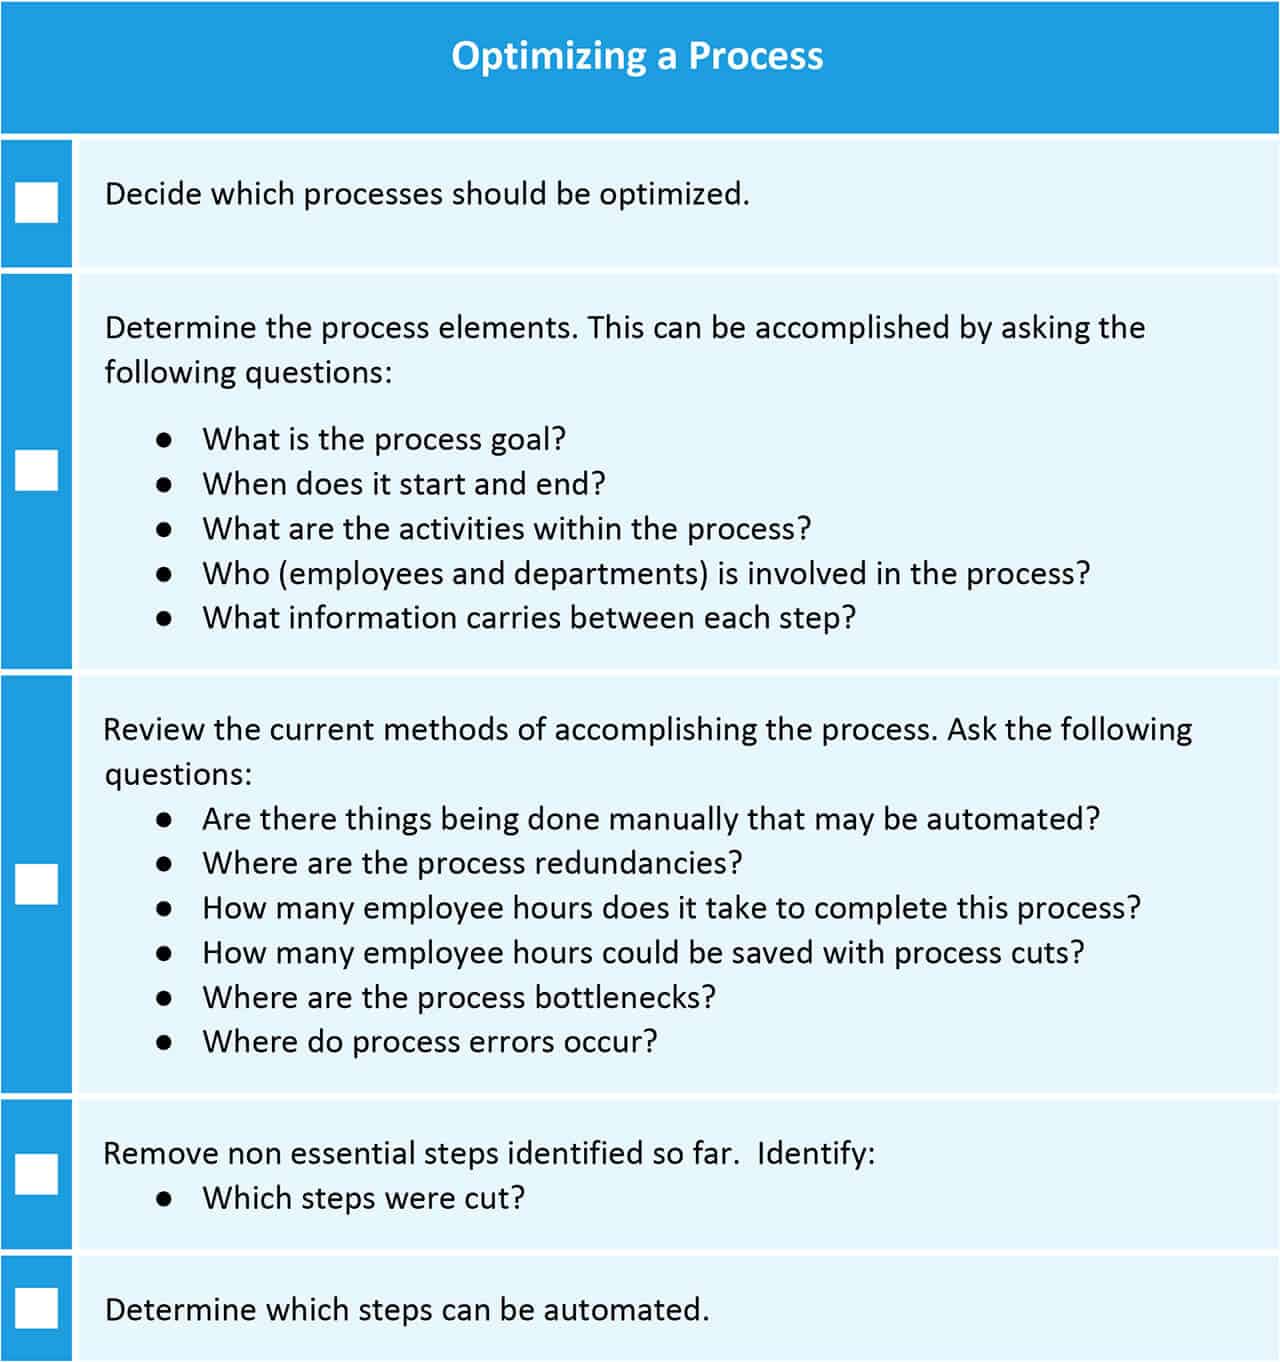 Optimizing a proces checklist